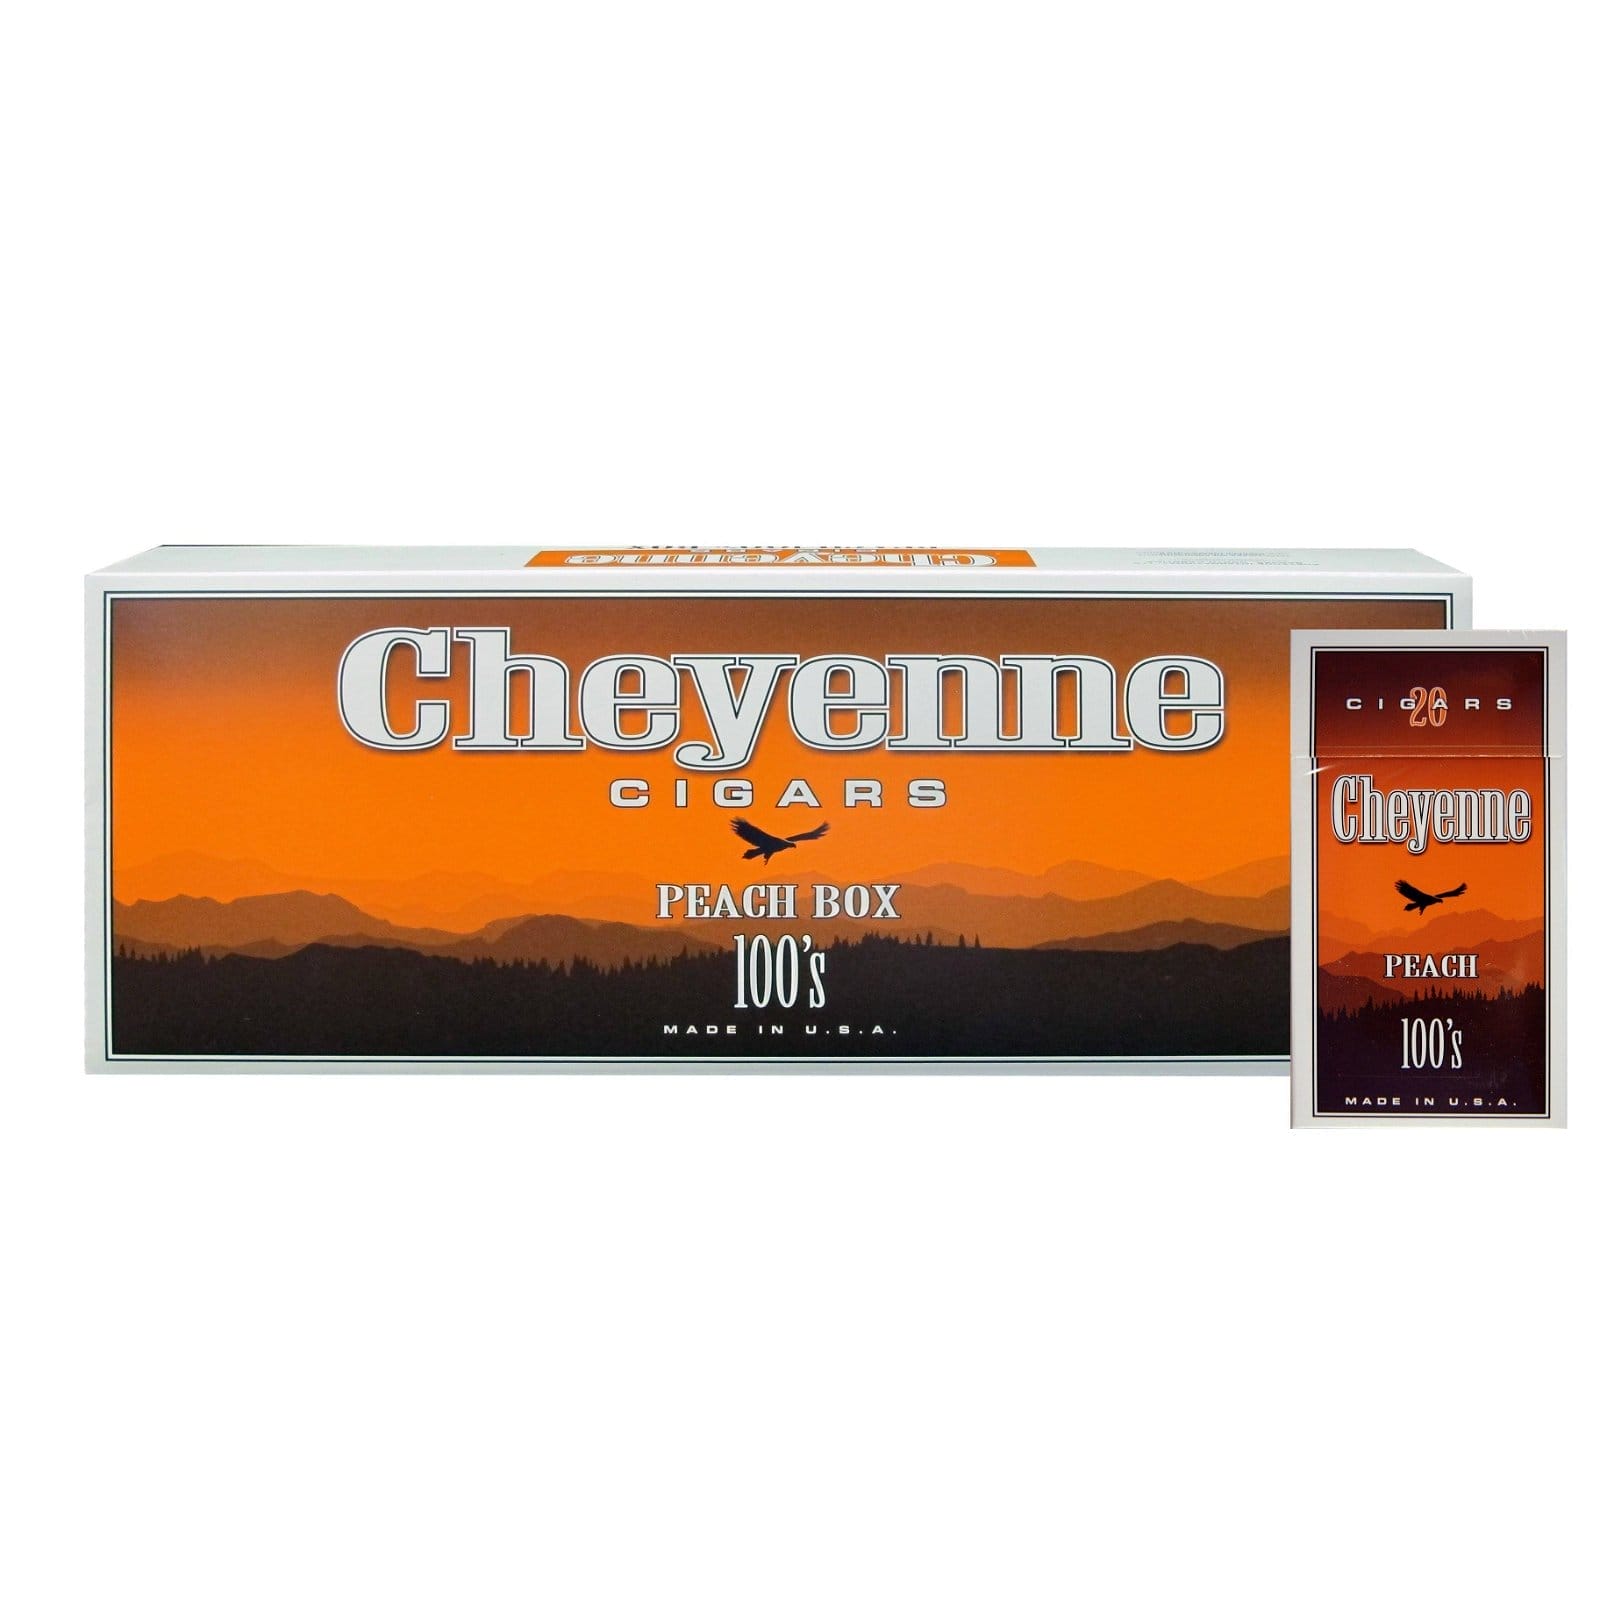 Cheyenne Peach Little Cigars